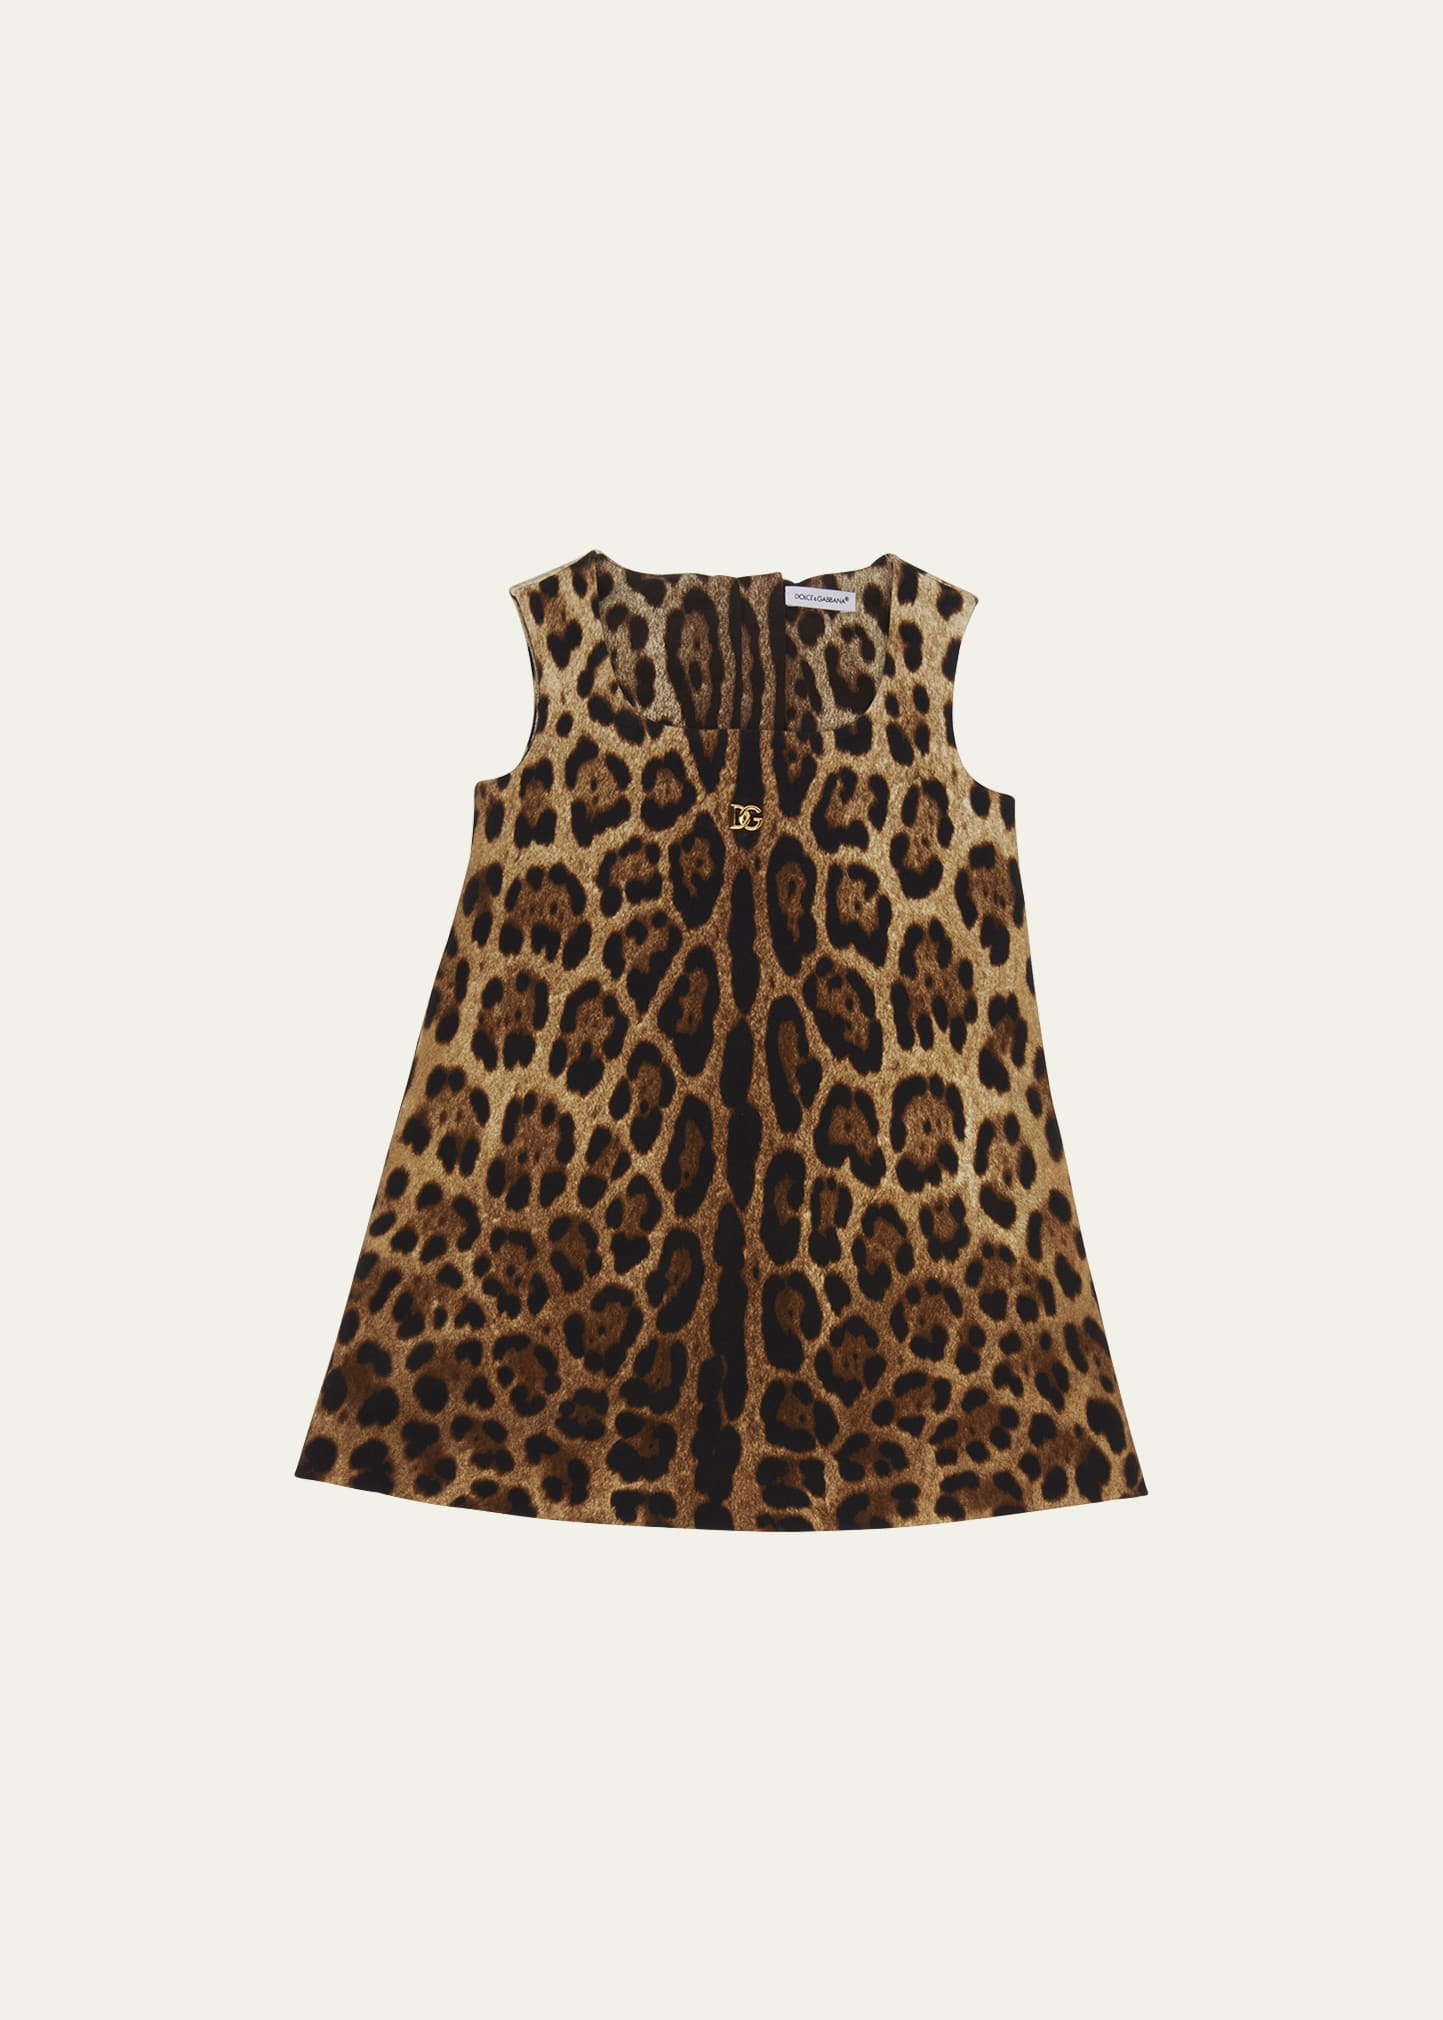 Dolce & Gabbana Kids' Little Girl's & Girl's Leopard Print Sleeveless Dress In Brown Leopard